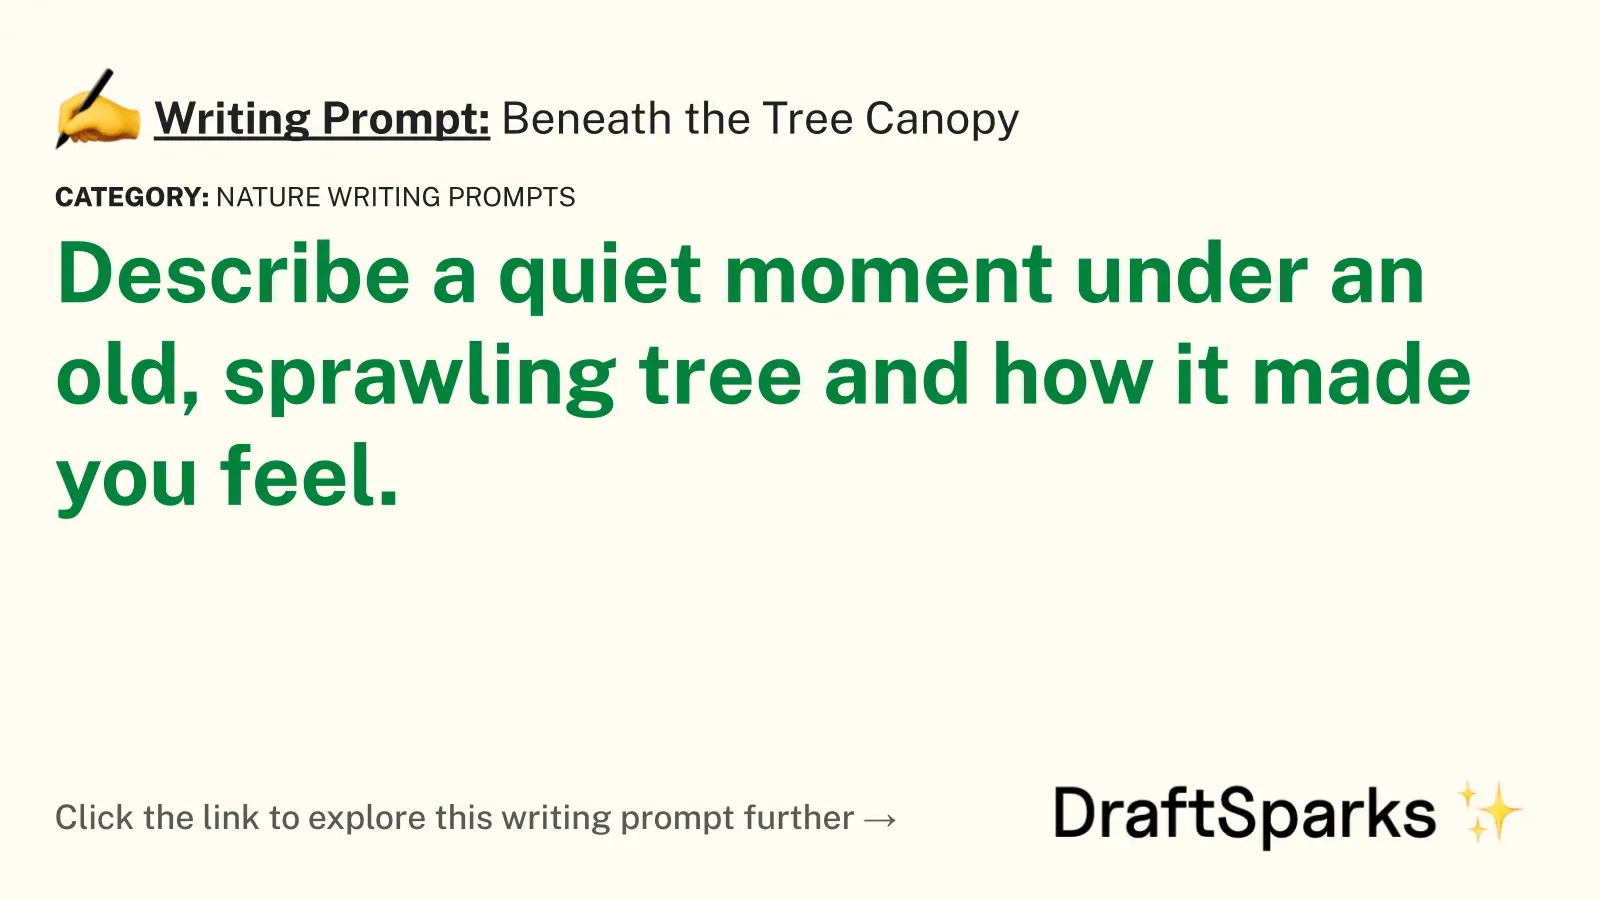 Beneath the Tree Canopy